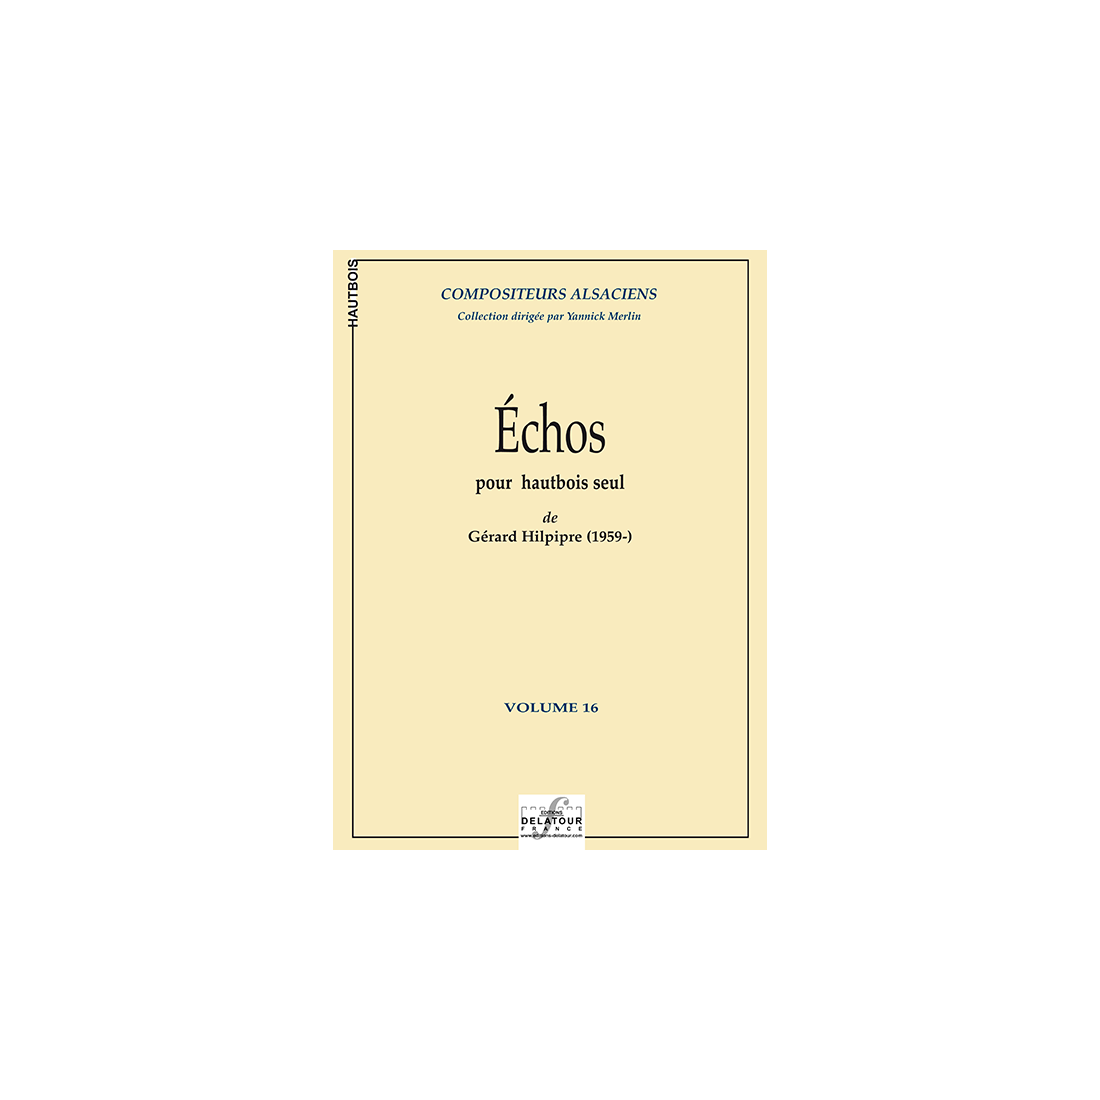 Echos for oboe